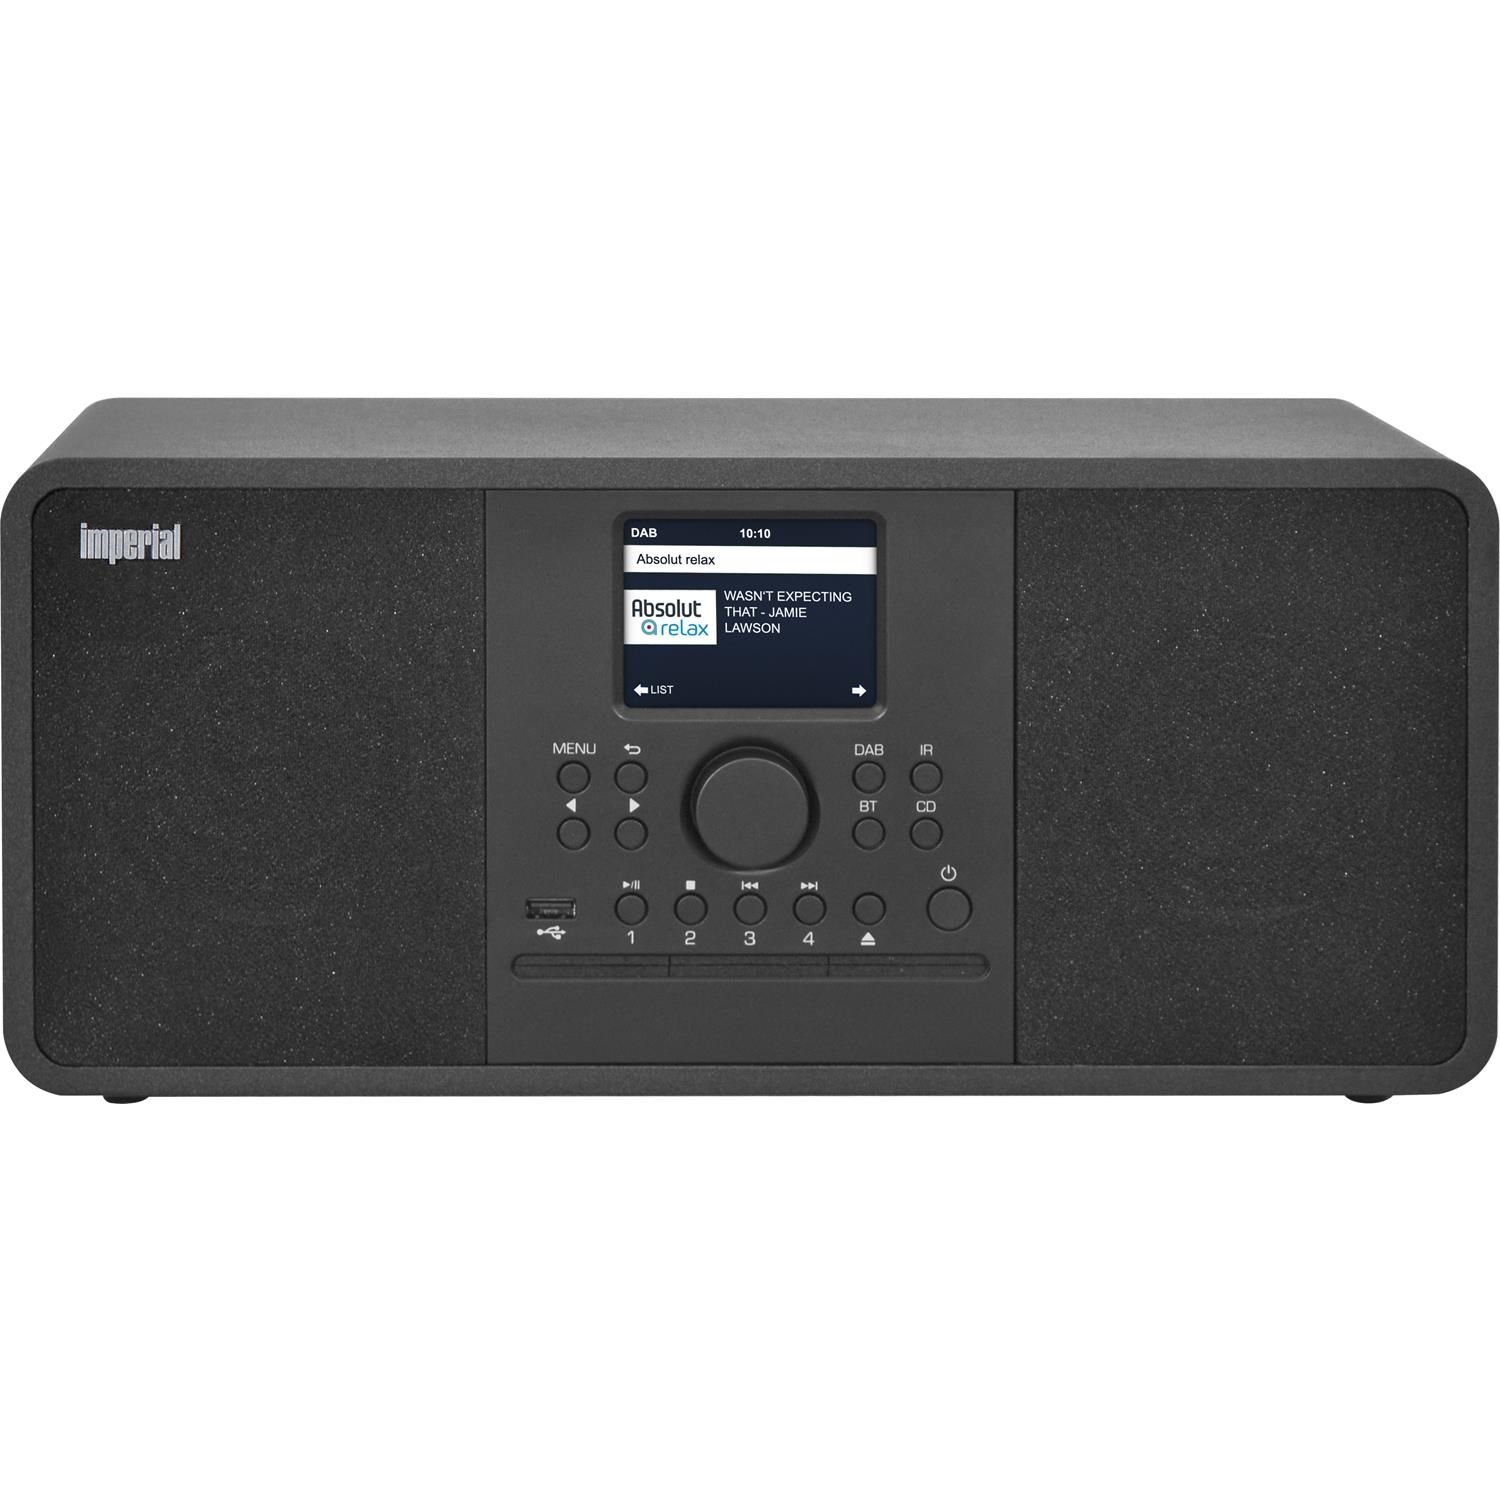 IMPERIAL by TELESTAR UKW-Radioempfang RDS UKW Internetradio) (DAB) (DAB+ Bluetooth i210 DAB+ CD DABMAN und CD Player mit Digitalradio